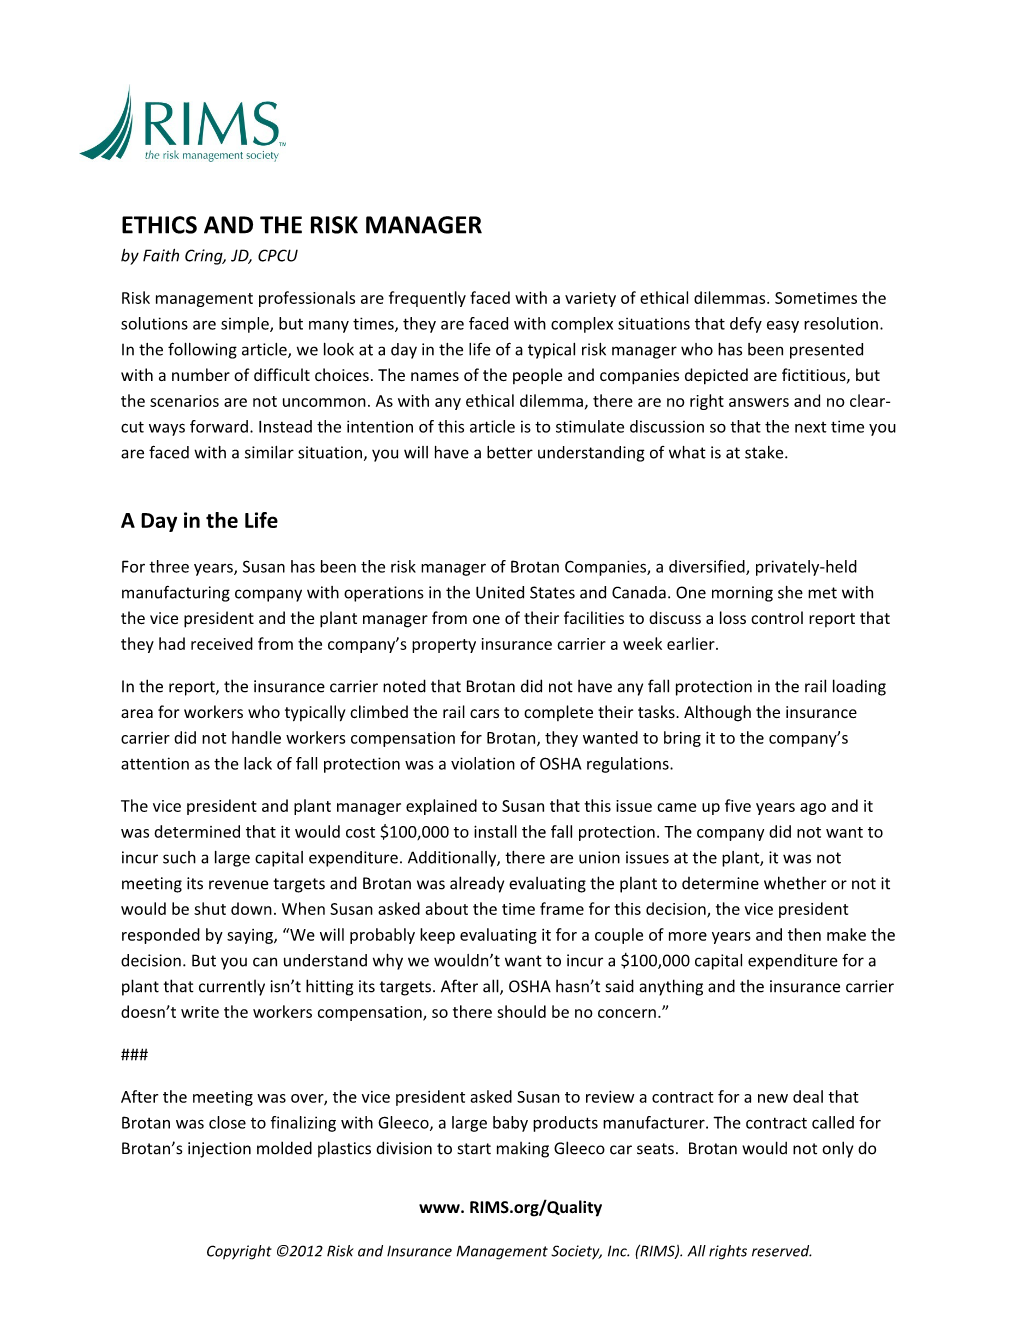 RIMS Principles of Risk Management Case Studiespage 1